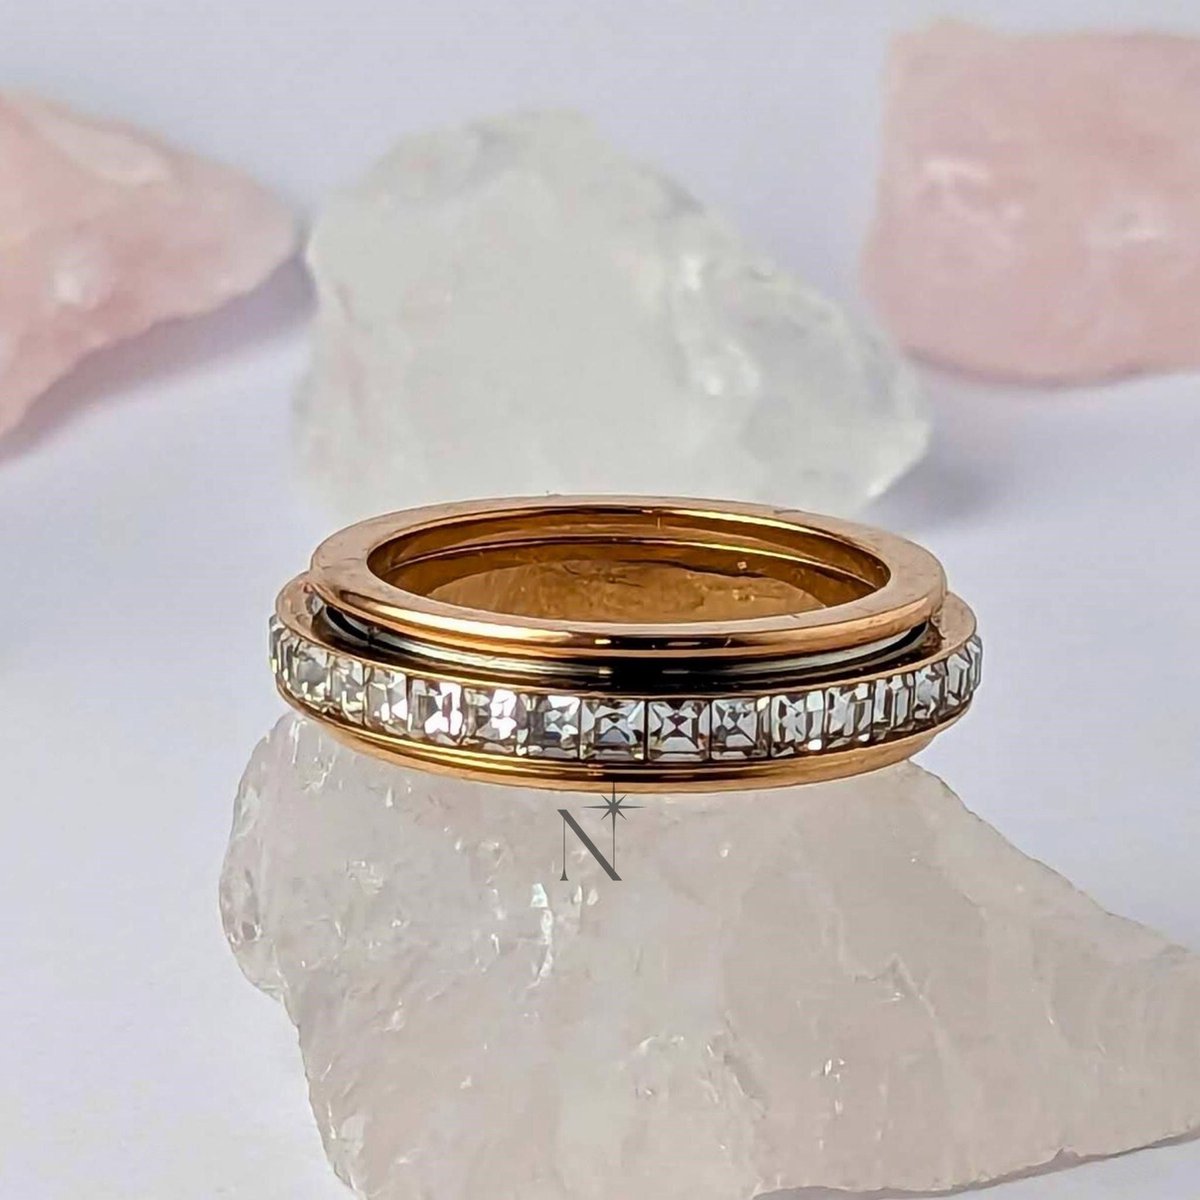 Luminora Elevate Ring Roségoud - Fidget Ring Diamanten - Anxiety Ring - Stress Ring - Anti Stress Ring - Spinner Ring - Spinning Ring - Draai Ring - Maat 57 | ⌀ 18.2 - Wellness Sieraden